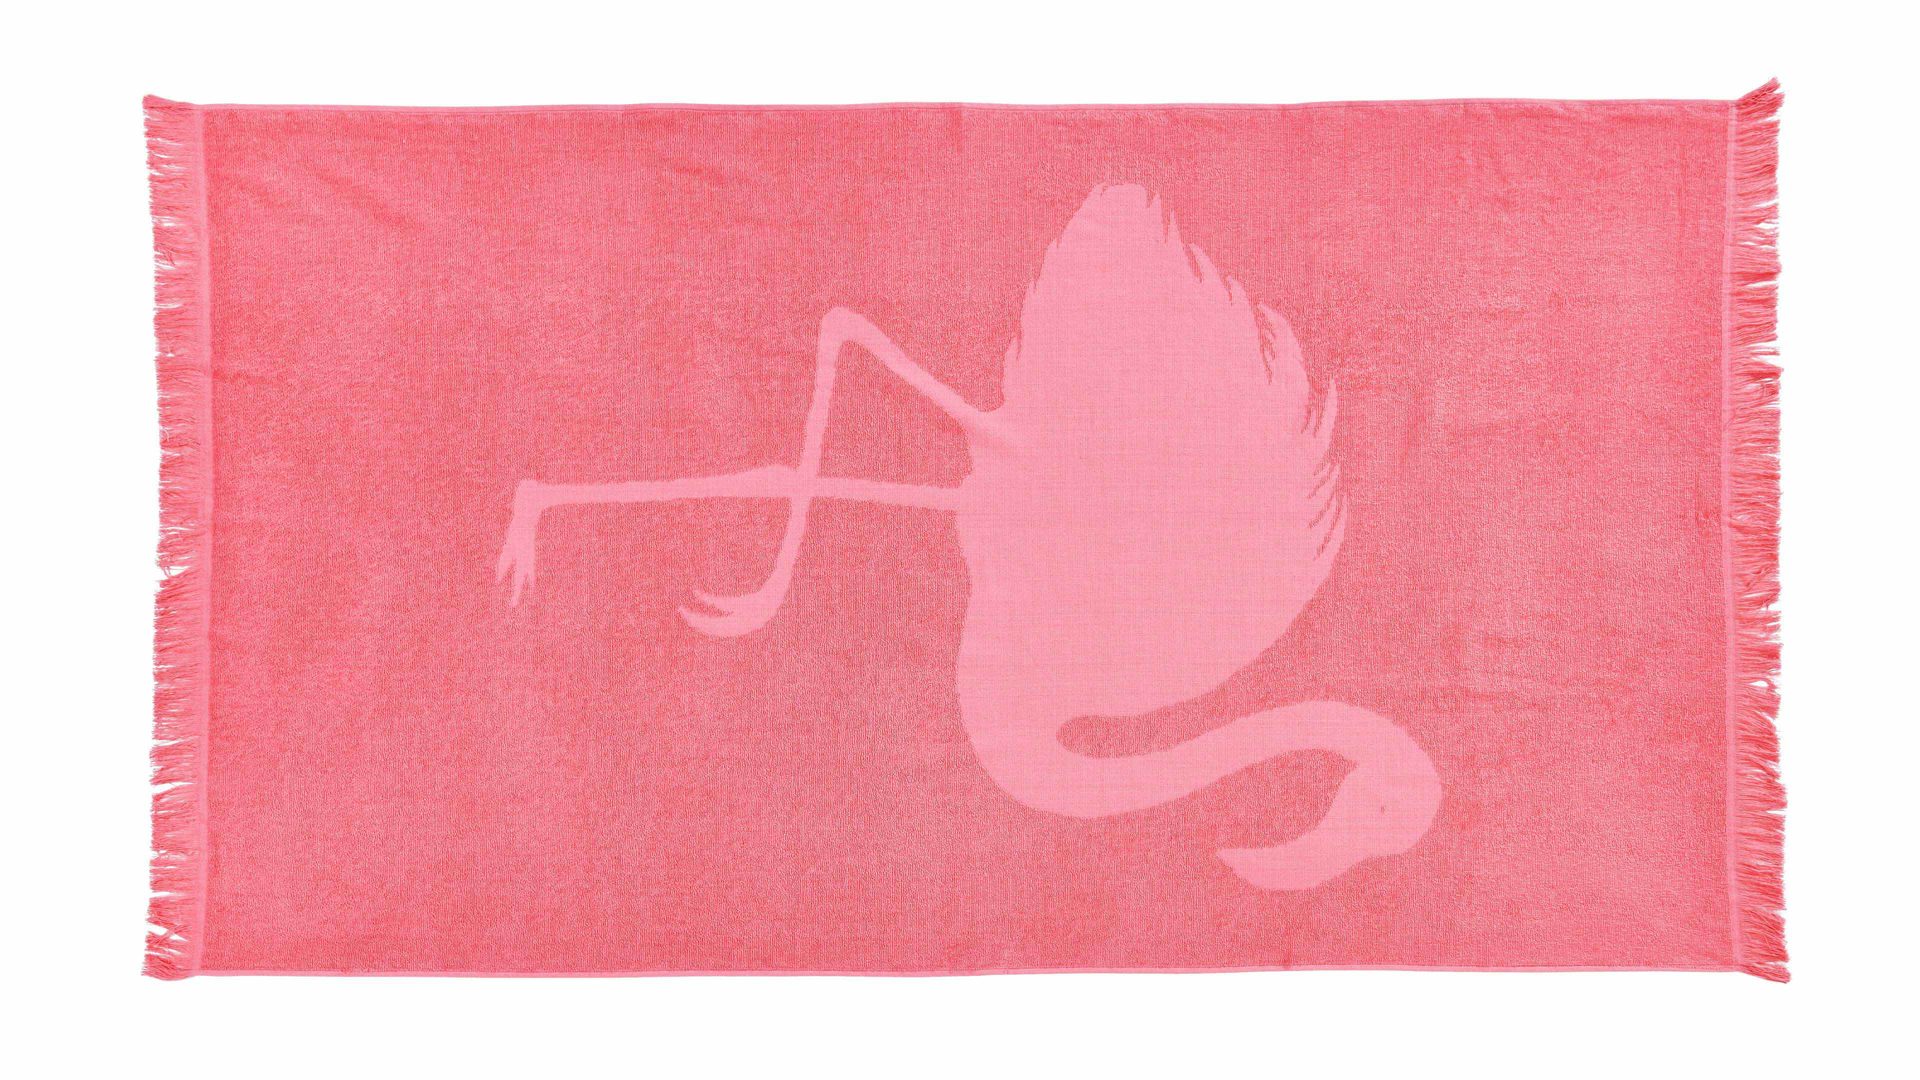 Hamamtuch Done® be different aus Stoff in Pink DONE® Hamamtuch Capri pinkfarbene Baumwolle – Motiv Flamingo